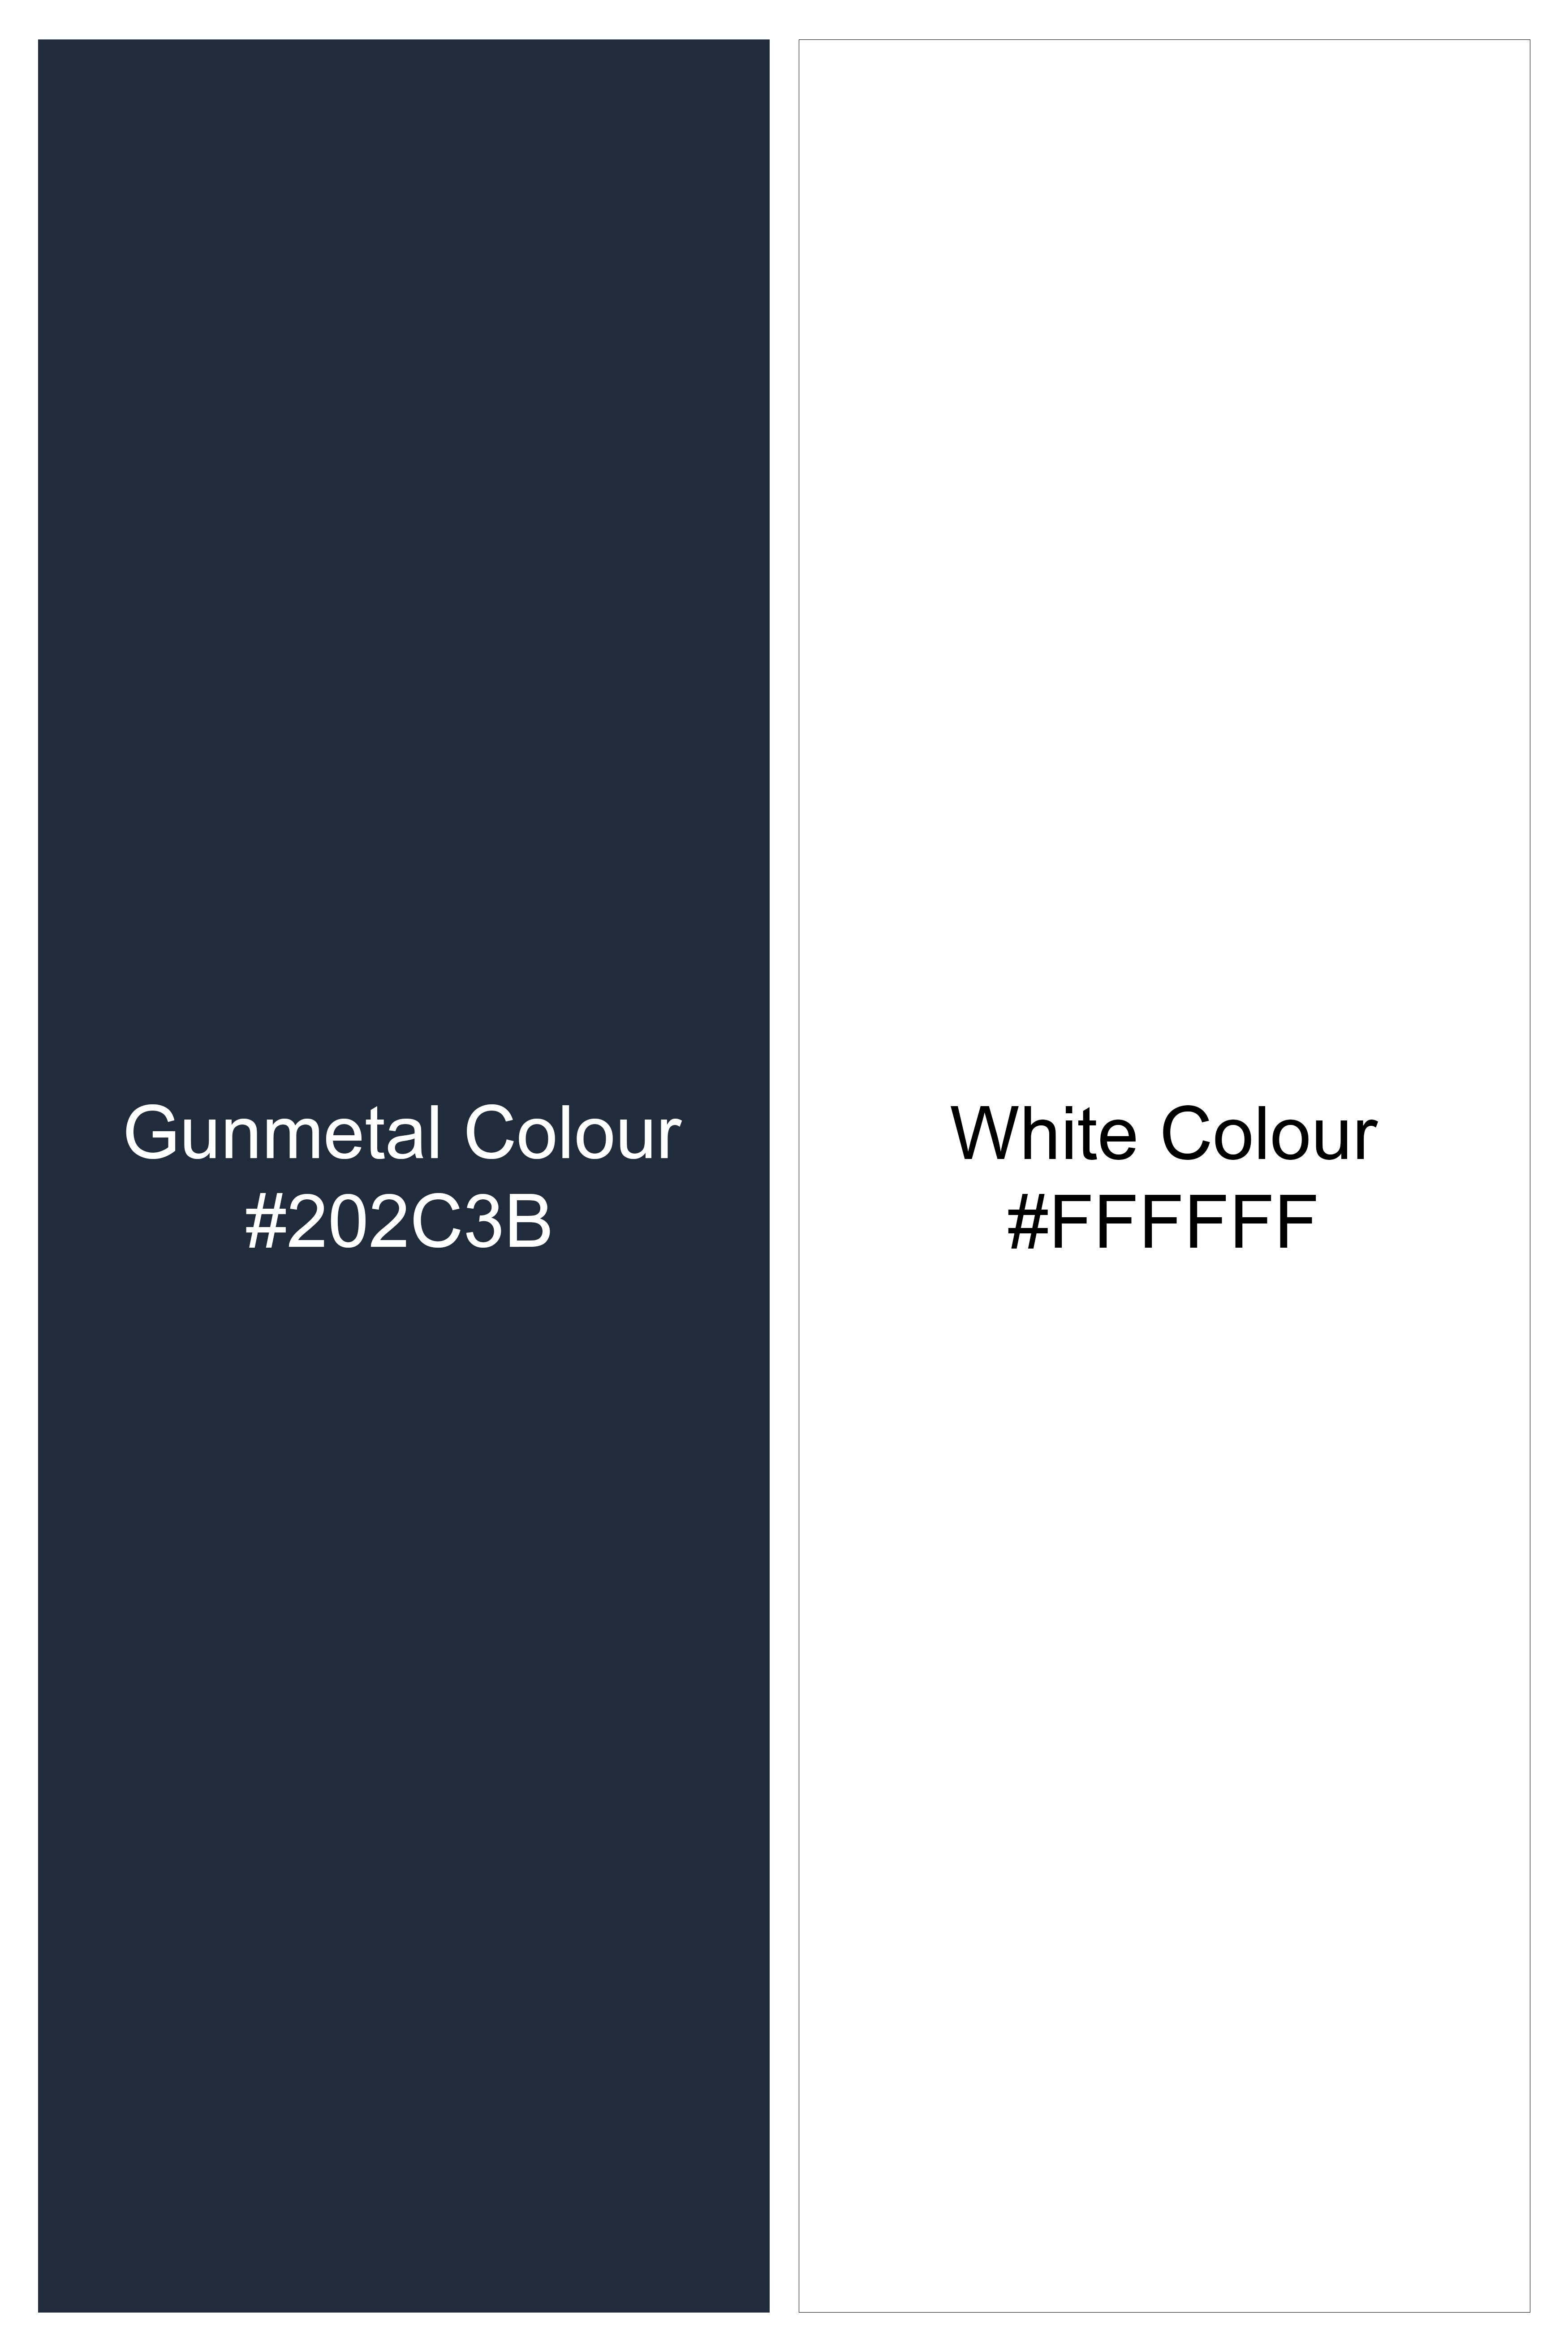 Gunmetal Blue with White Striped Wool Rich Designer Blazer BL2772-DB-D481-36, BL2772-DB-D481-38, BL2772-DB-D481-40, BL2772-DB-D481-42, BL2772-DB-D481-44, BL2772-DB-D481-46, BL2772-DB-D481-48, BL2772-DB-D481-50, BL2772-DB-D481-52, BL2772-DB-D481-54, BL2772-DB-D481-56, BL2772-DB-D481-58, BL2772-DB-D481-60